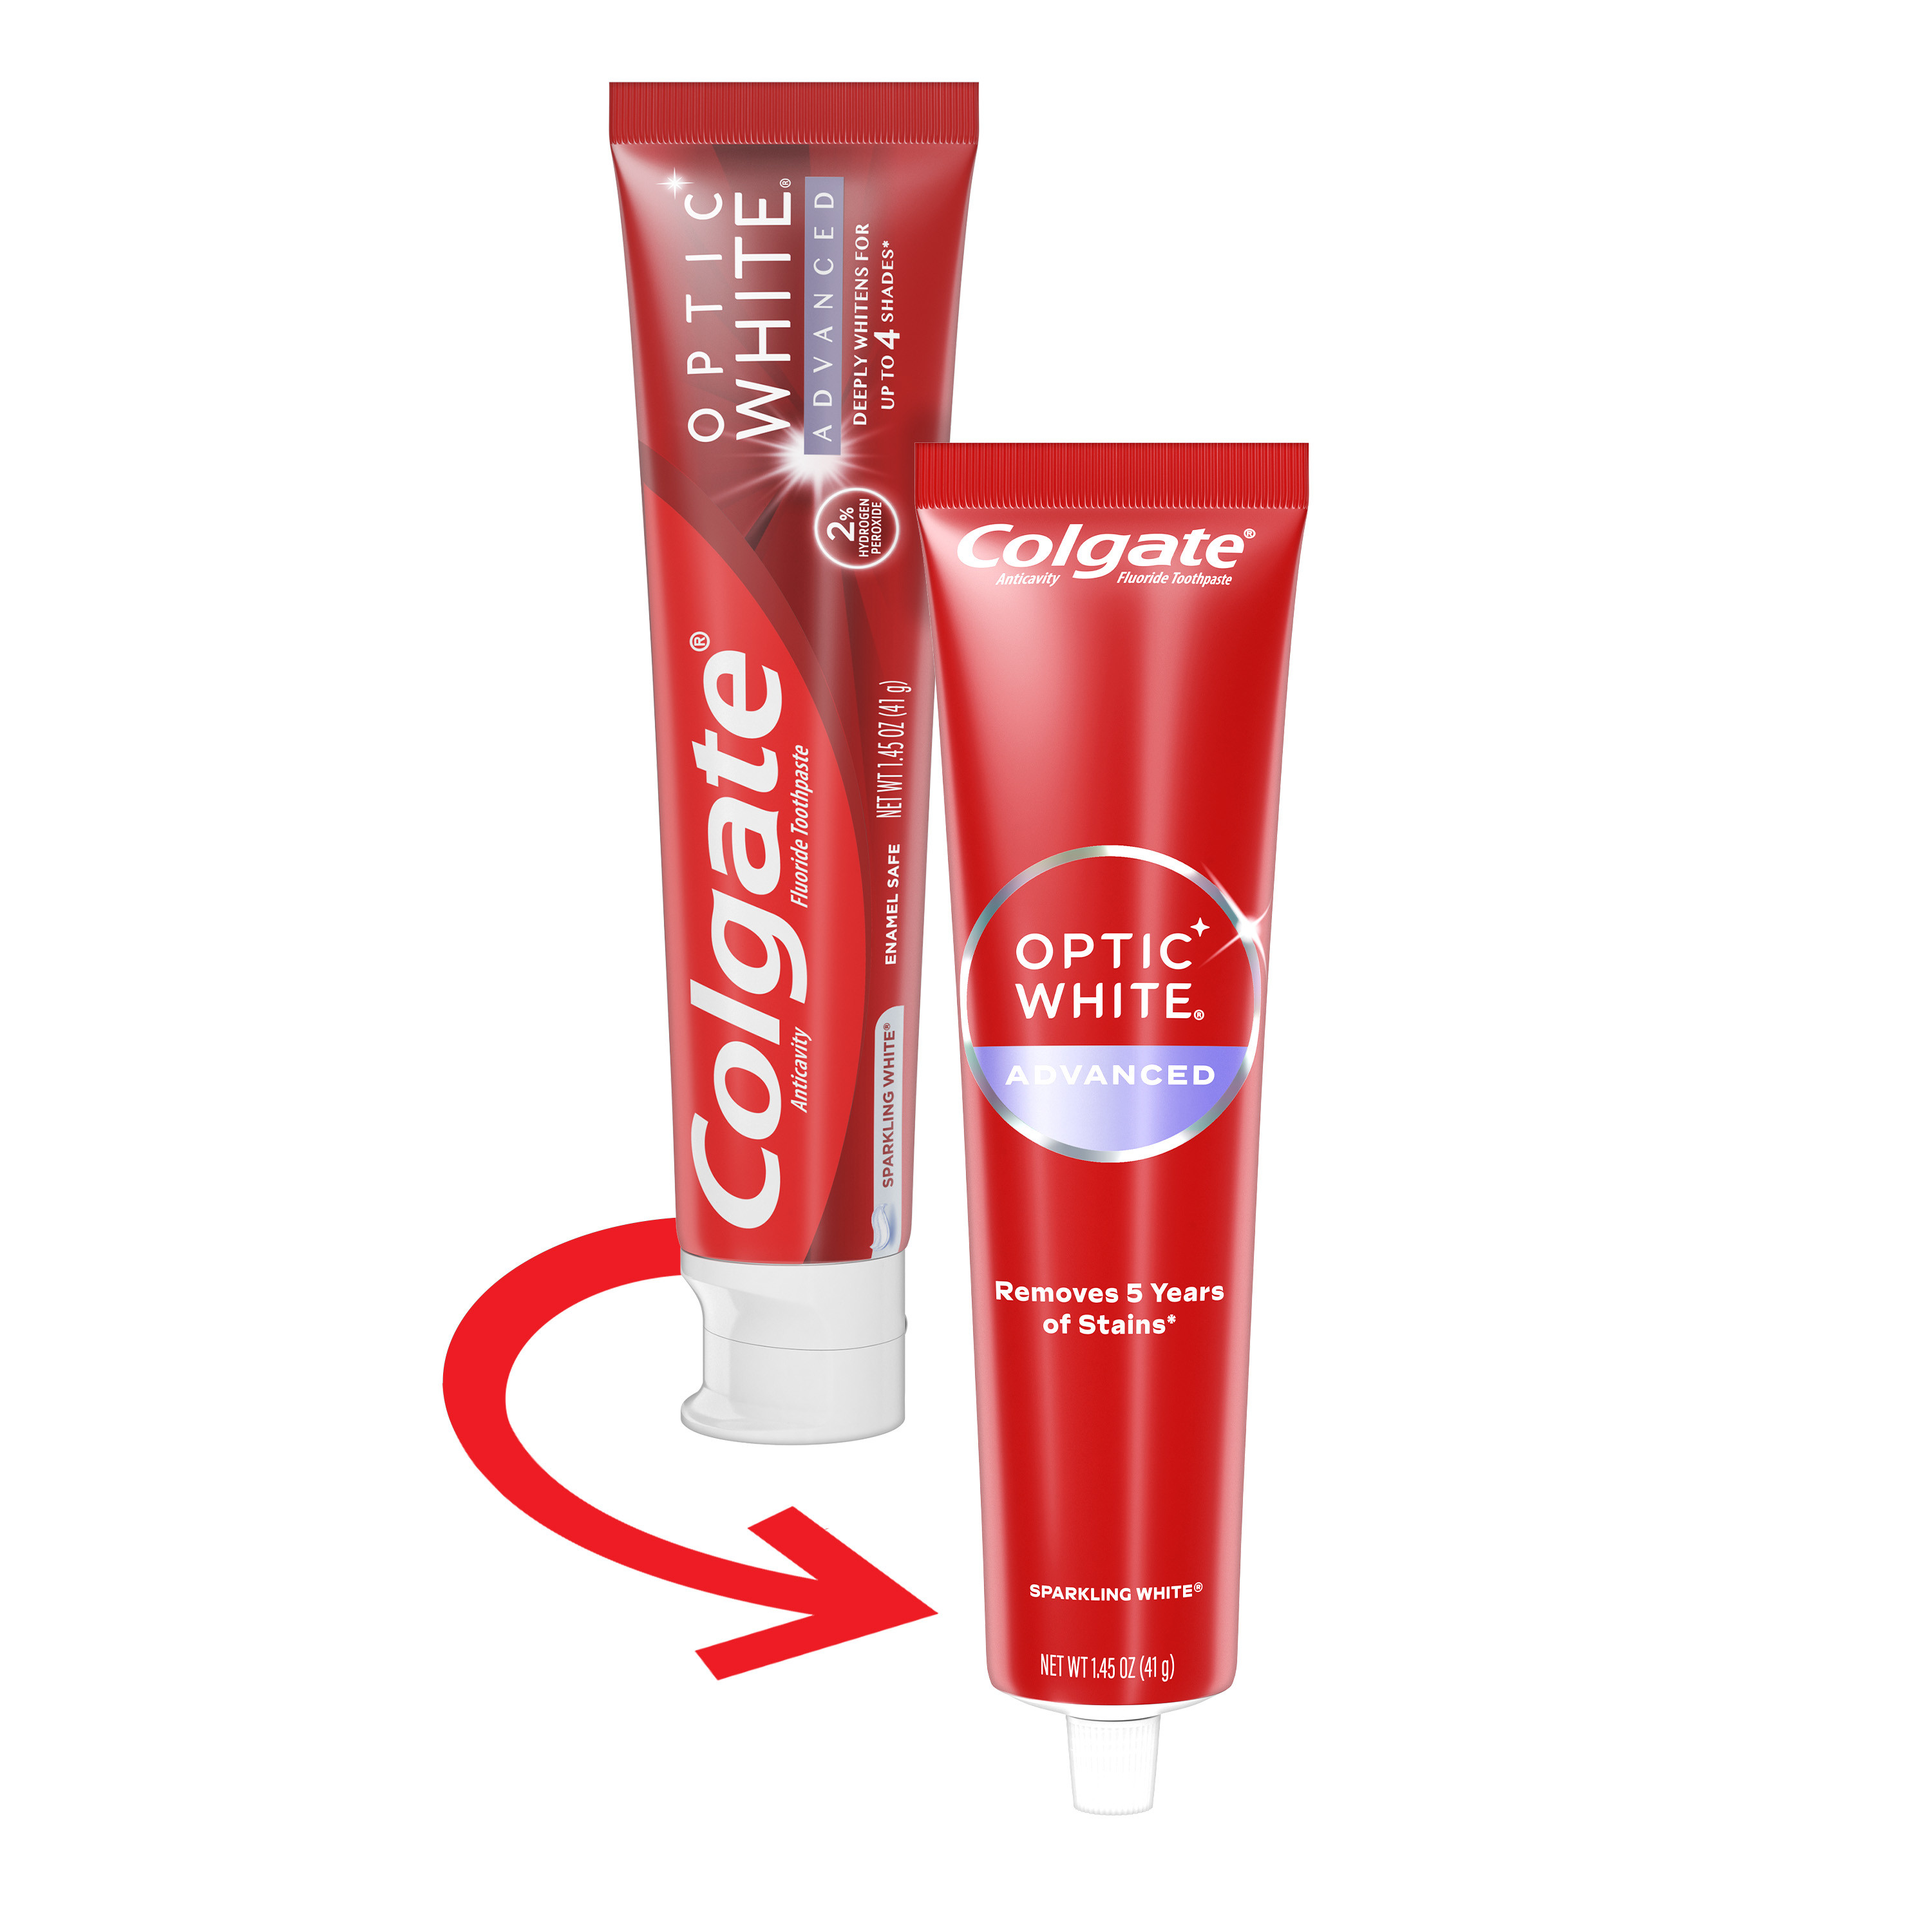 Colgate Travel Size Optic White Advanced Hydrogen Peroxide Toothpaste, Sparkling White, 1.45 oz - image 1 of 12